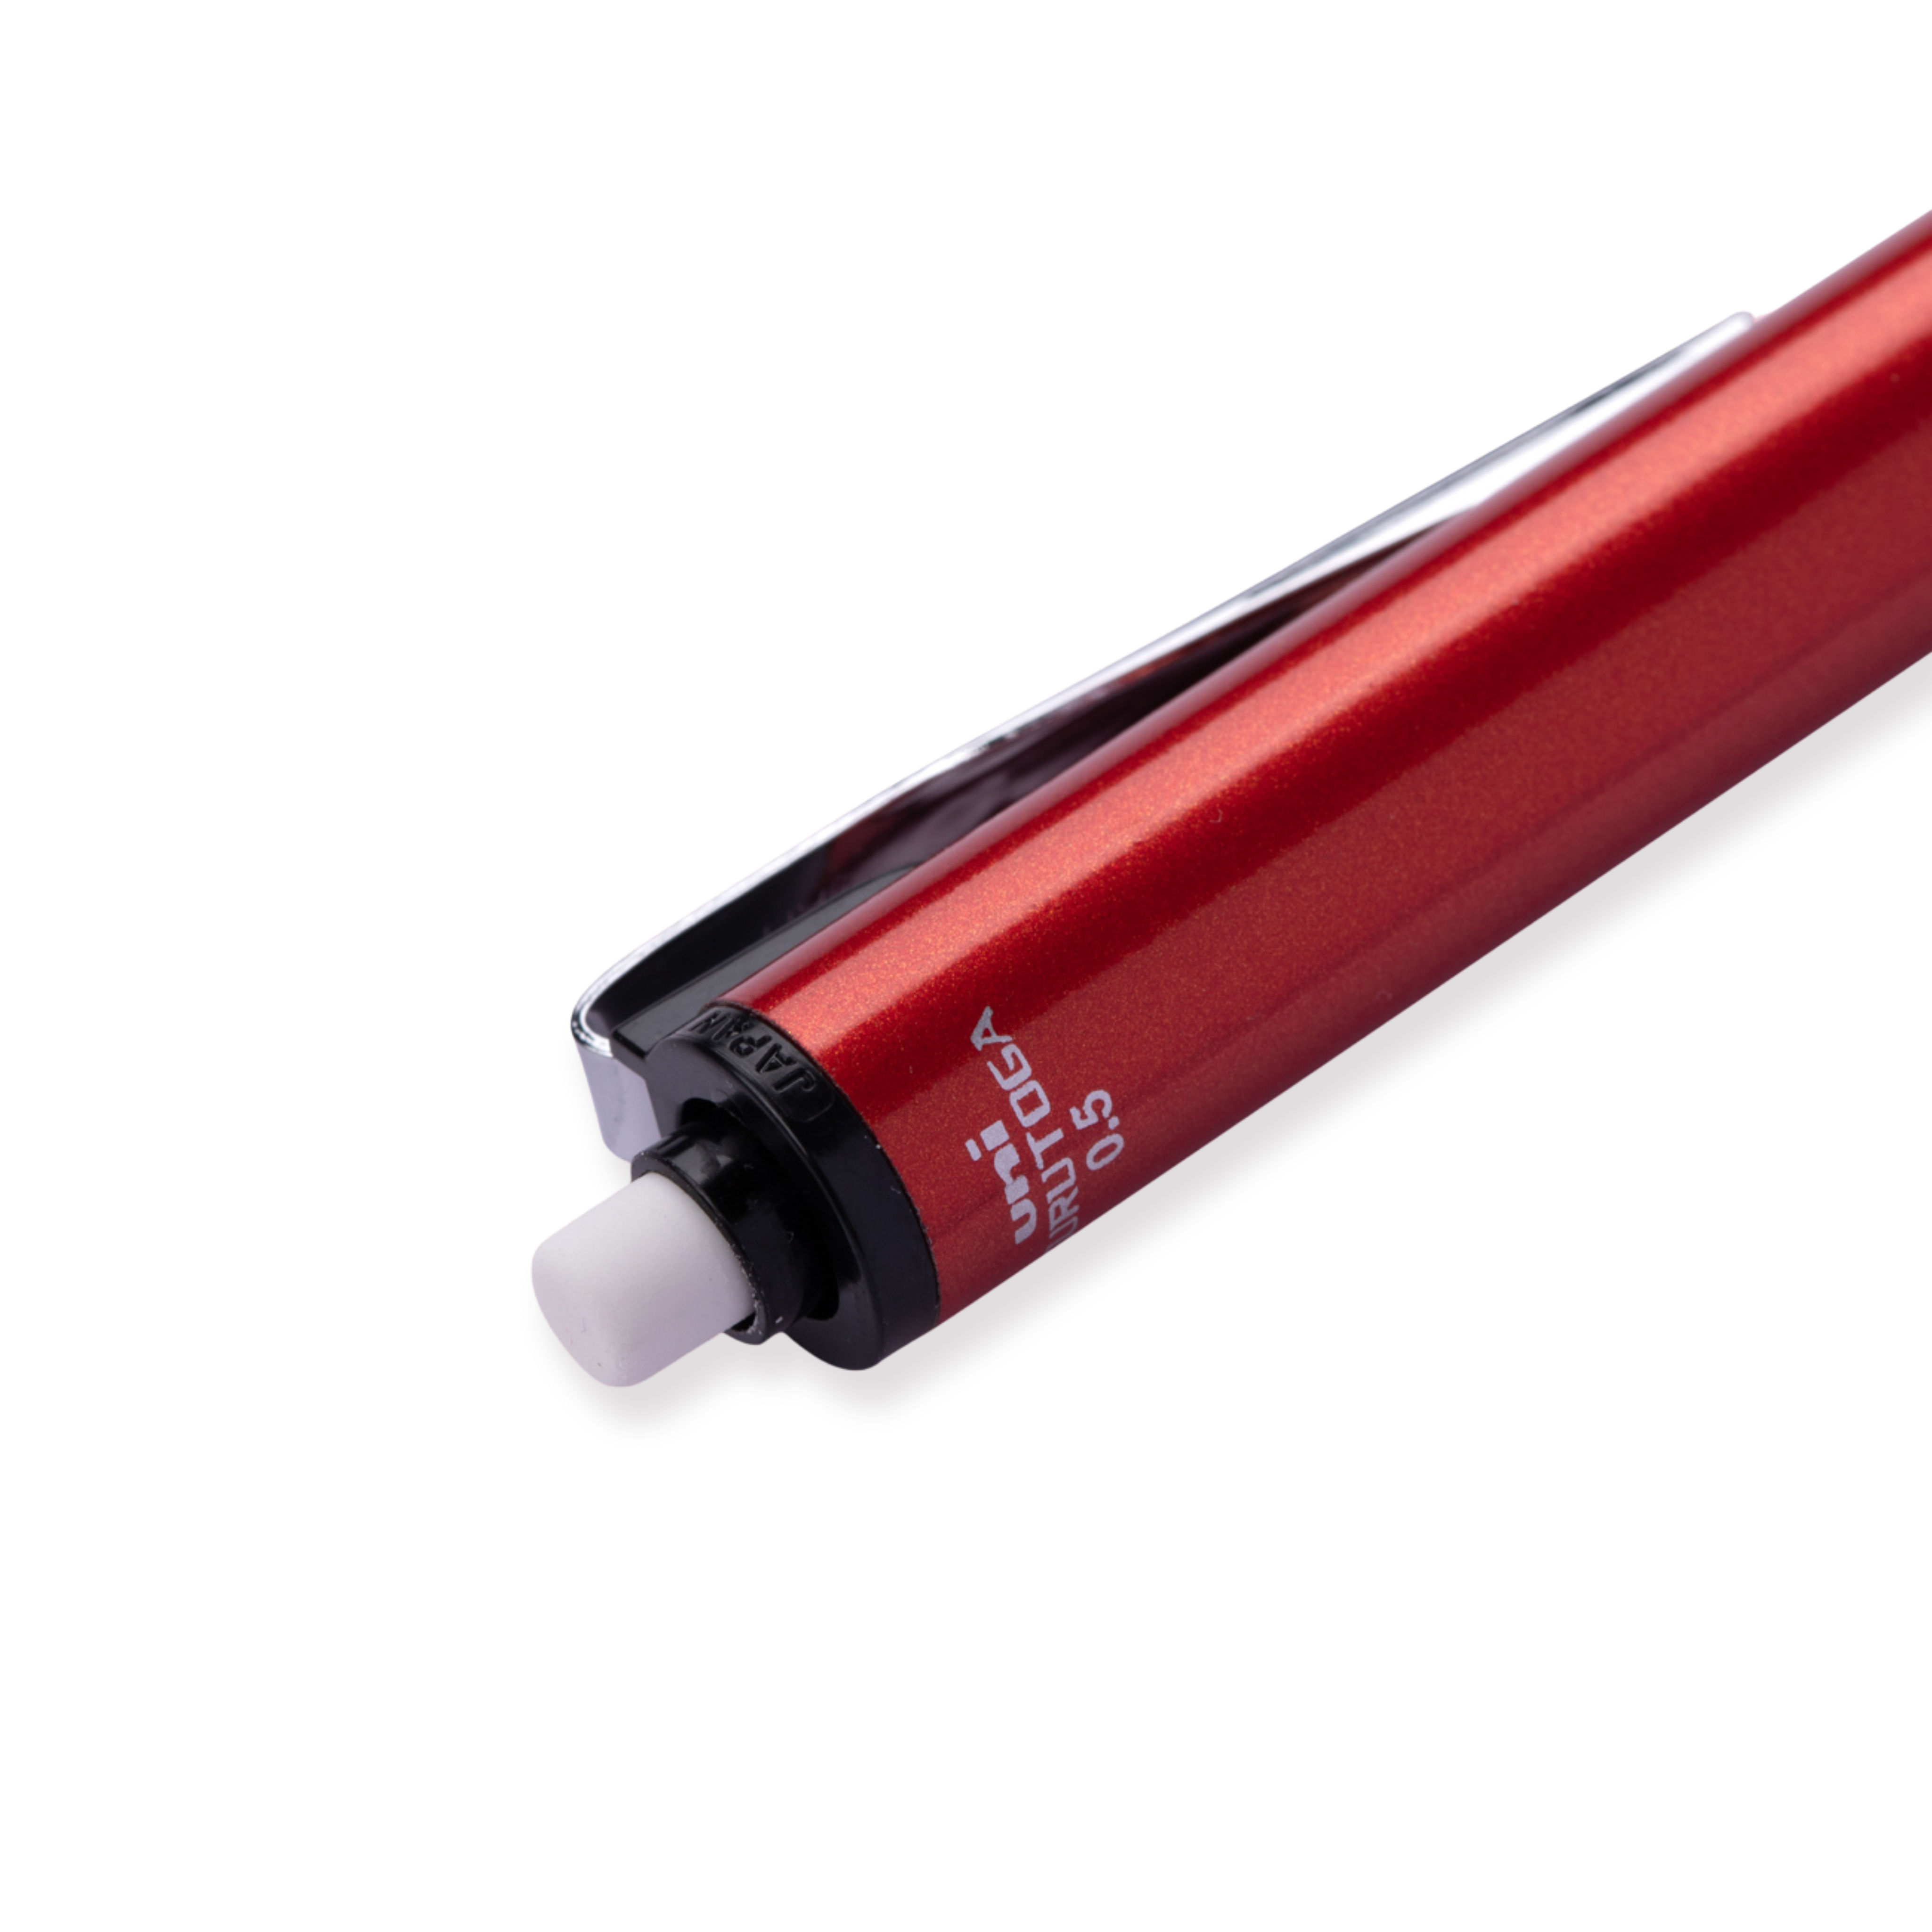 Uni Kuru Toga Mechanical Pencil 0.5 mm: Auto Rotating Leads - Red